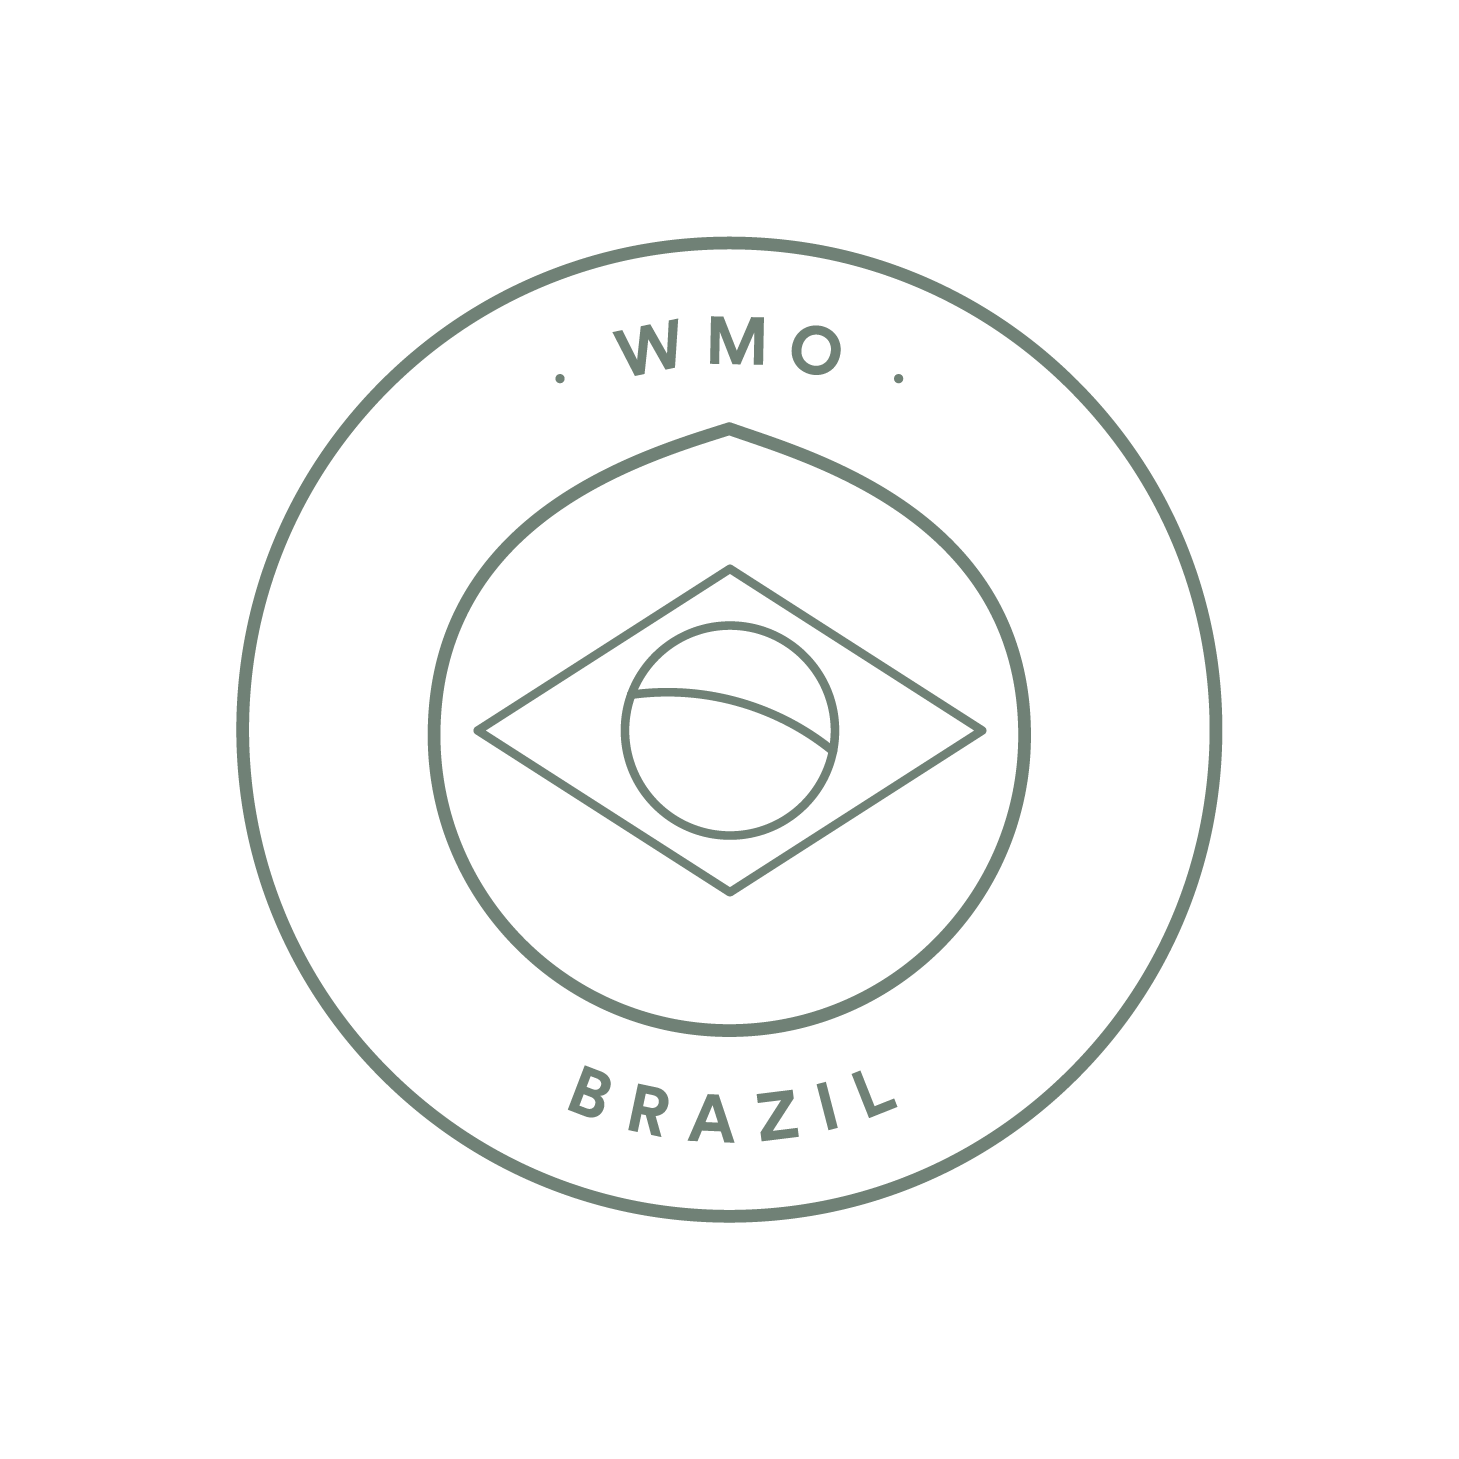 Brazil macadamia grower | WMO